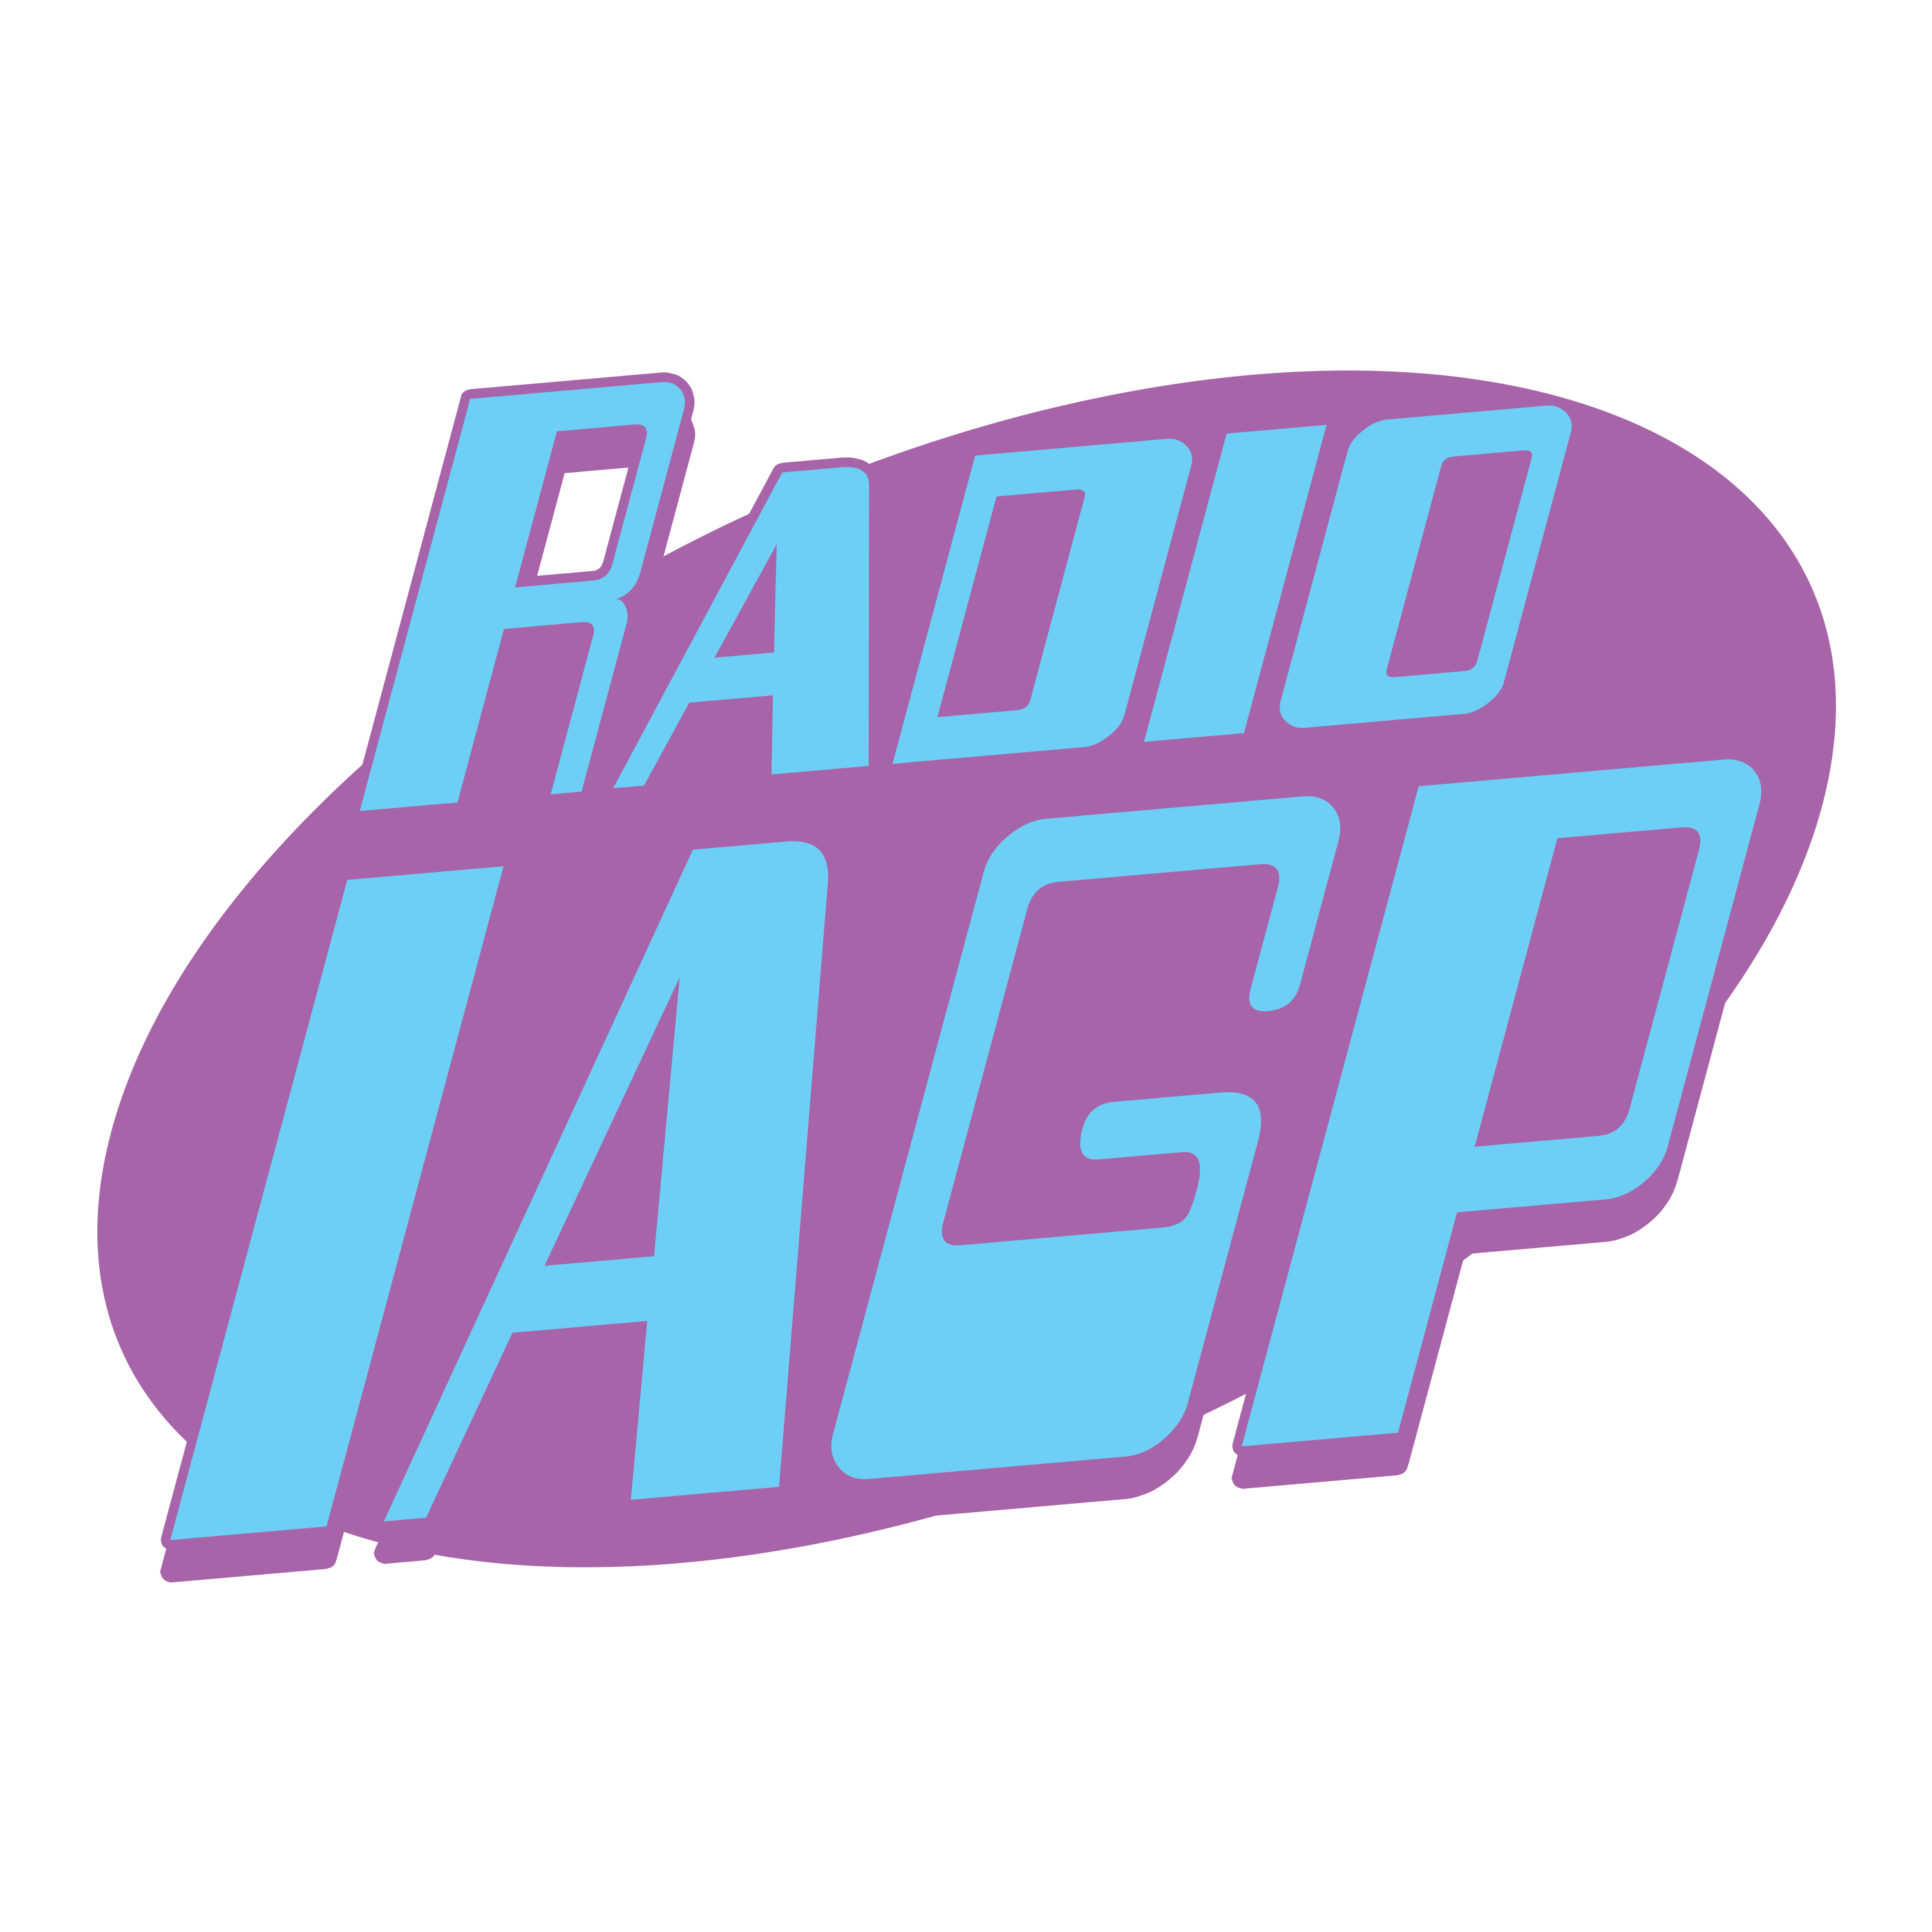 Radio IAGP by Implausibly Average